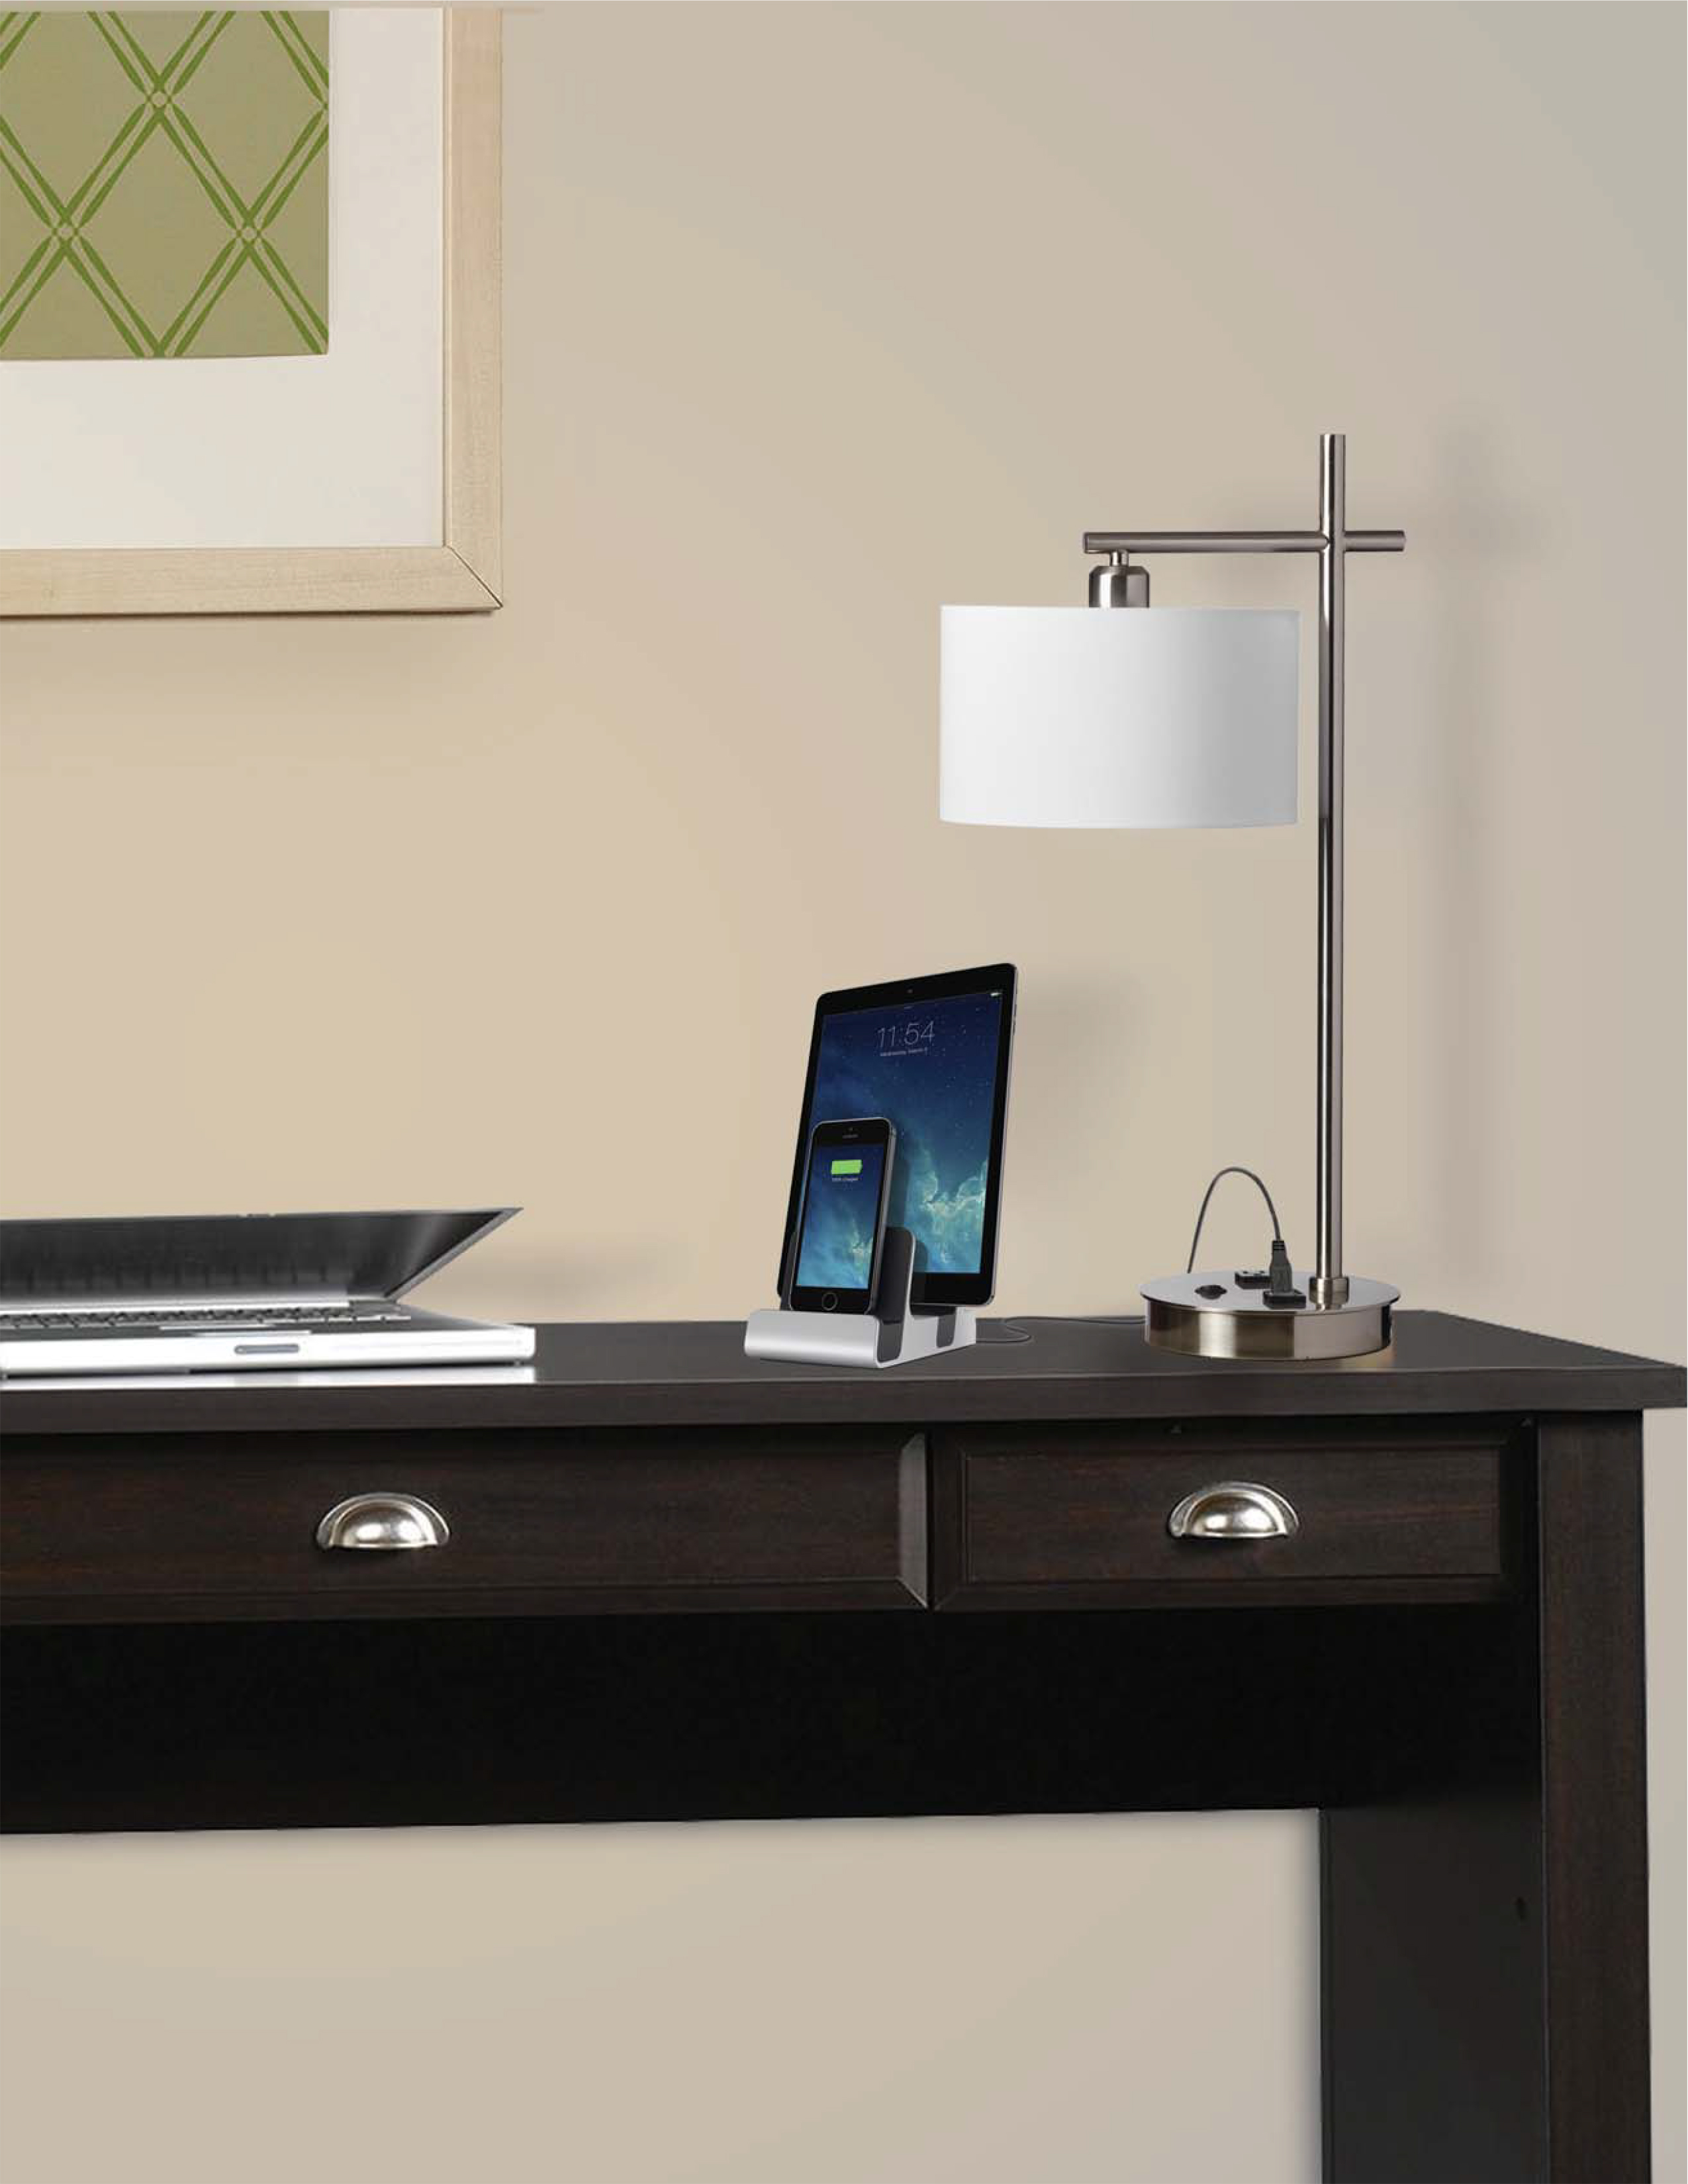 1LT Incandescent Table Lamp w/USB Port, SC